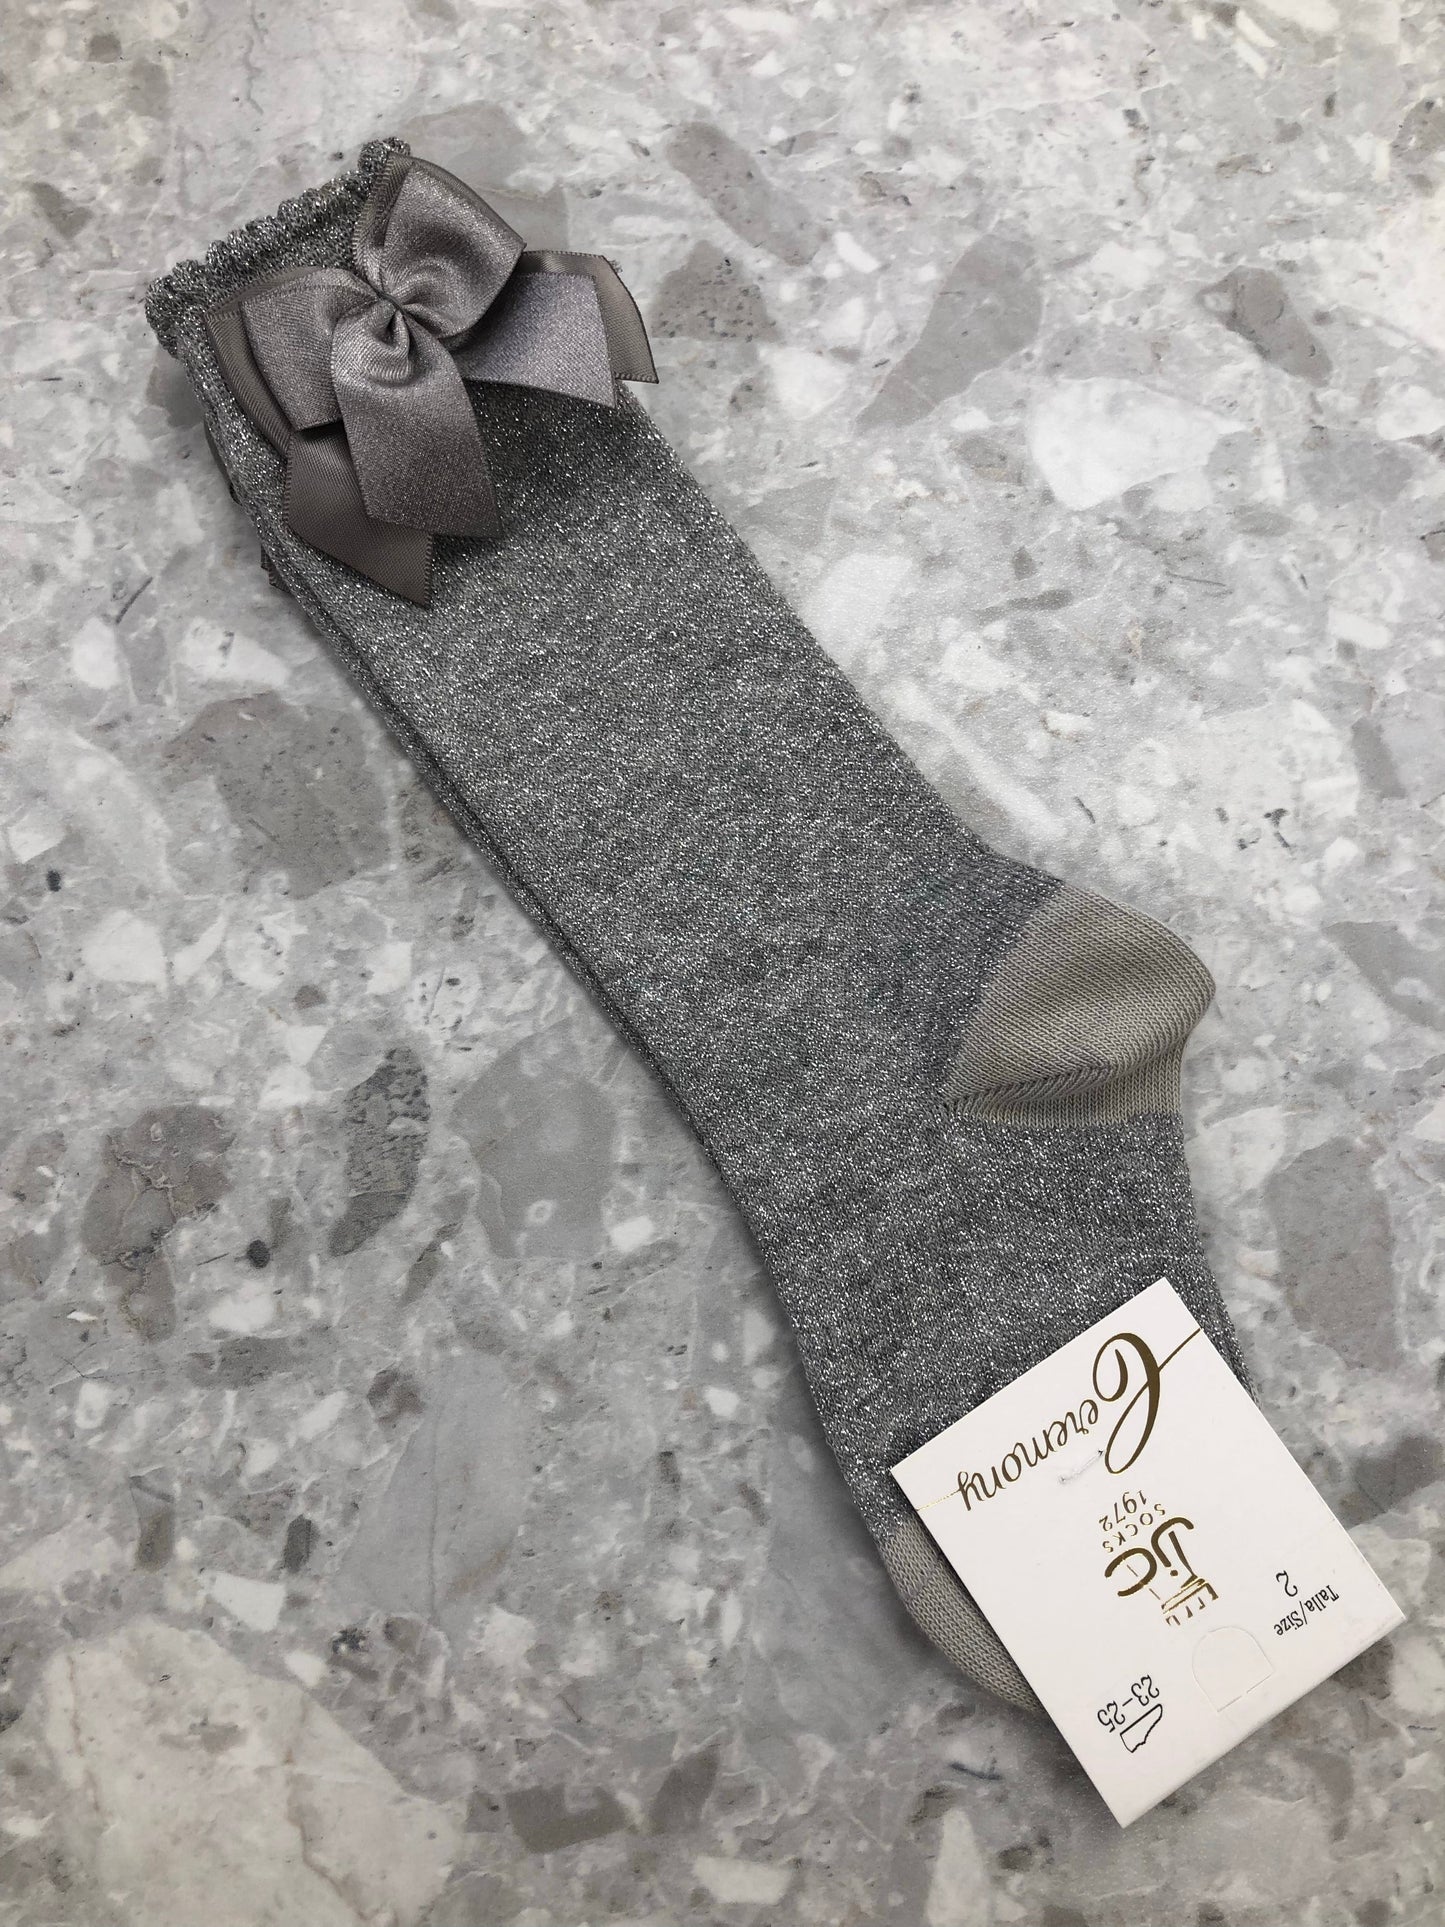 JC CASTELLA Metallic Bow Socks - Silver